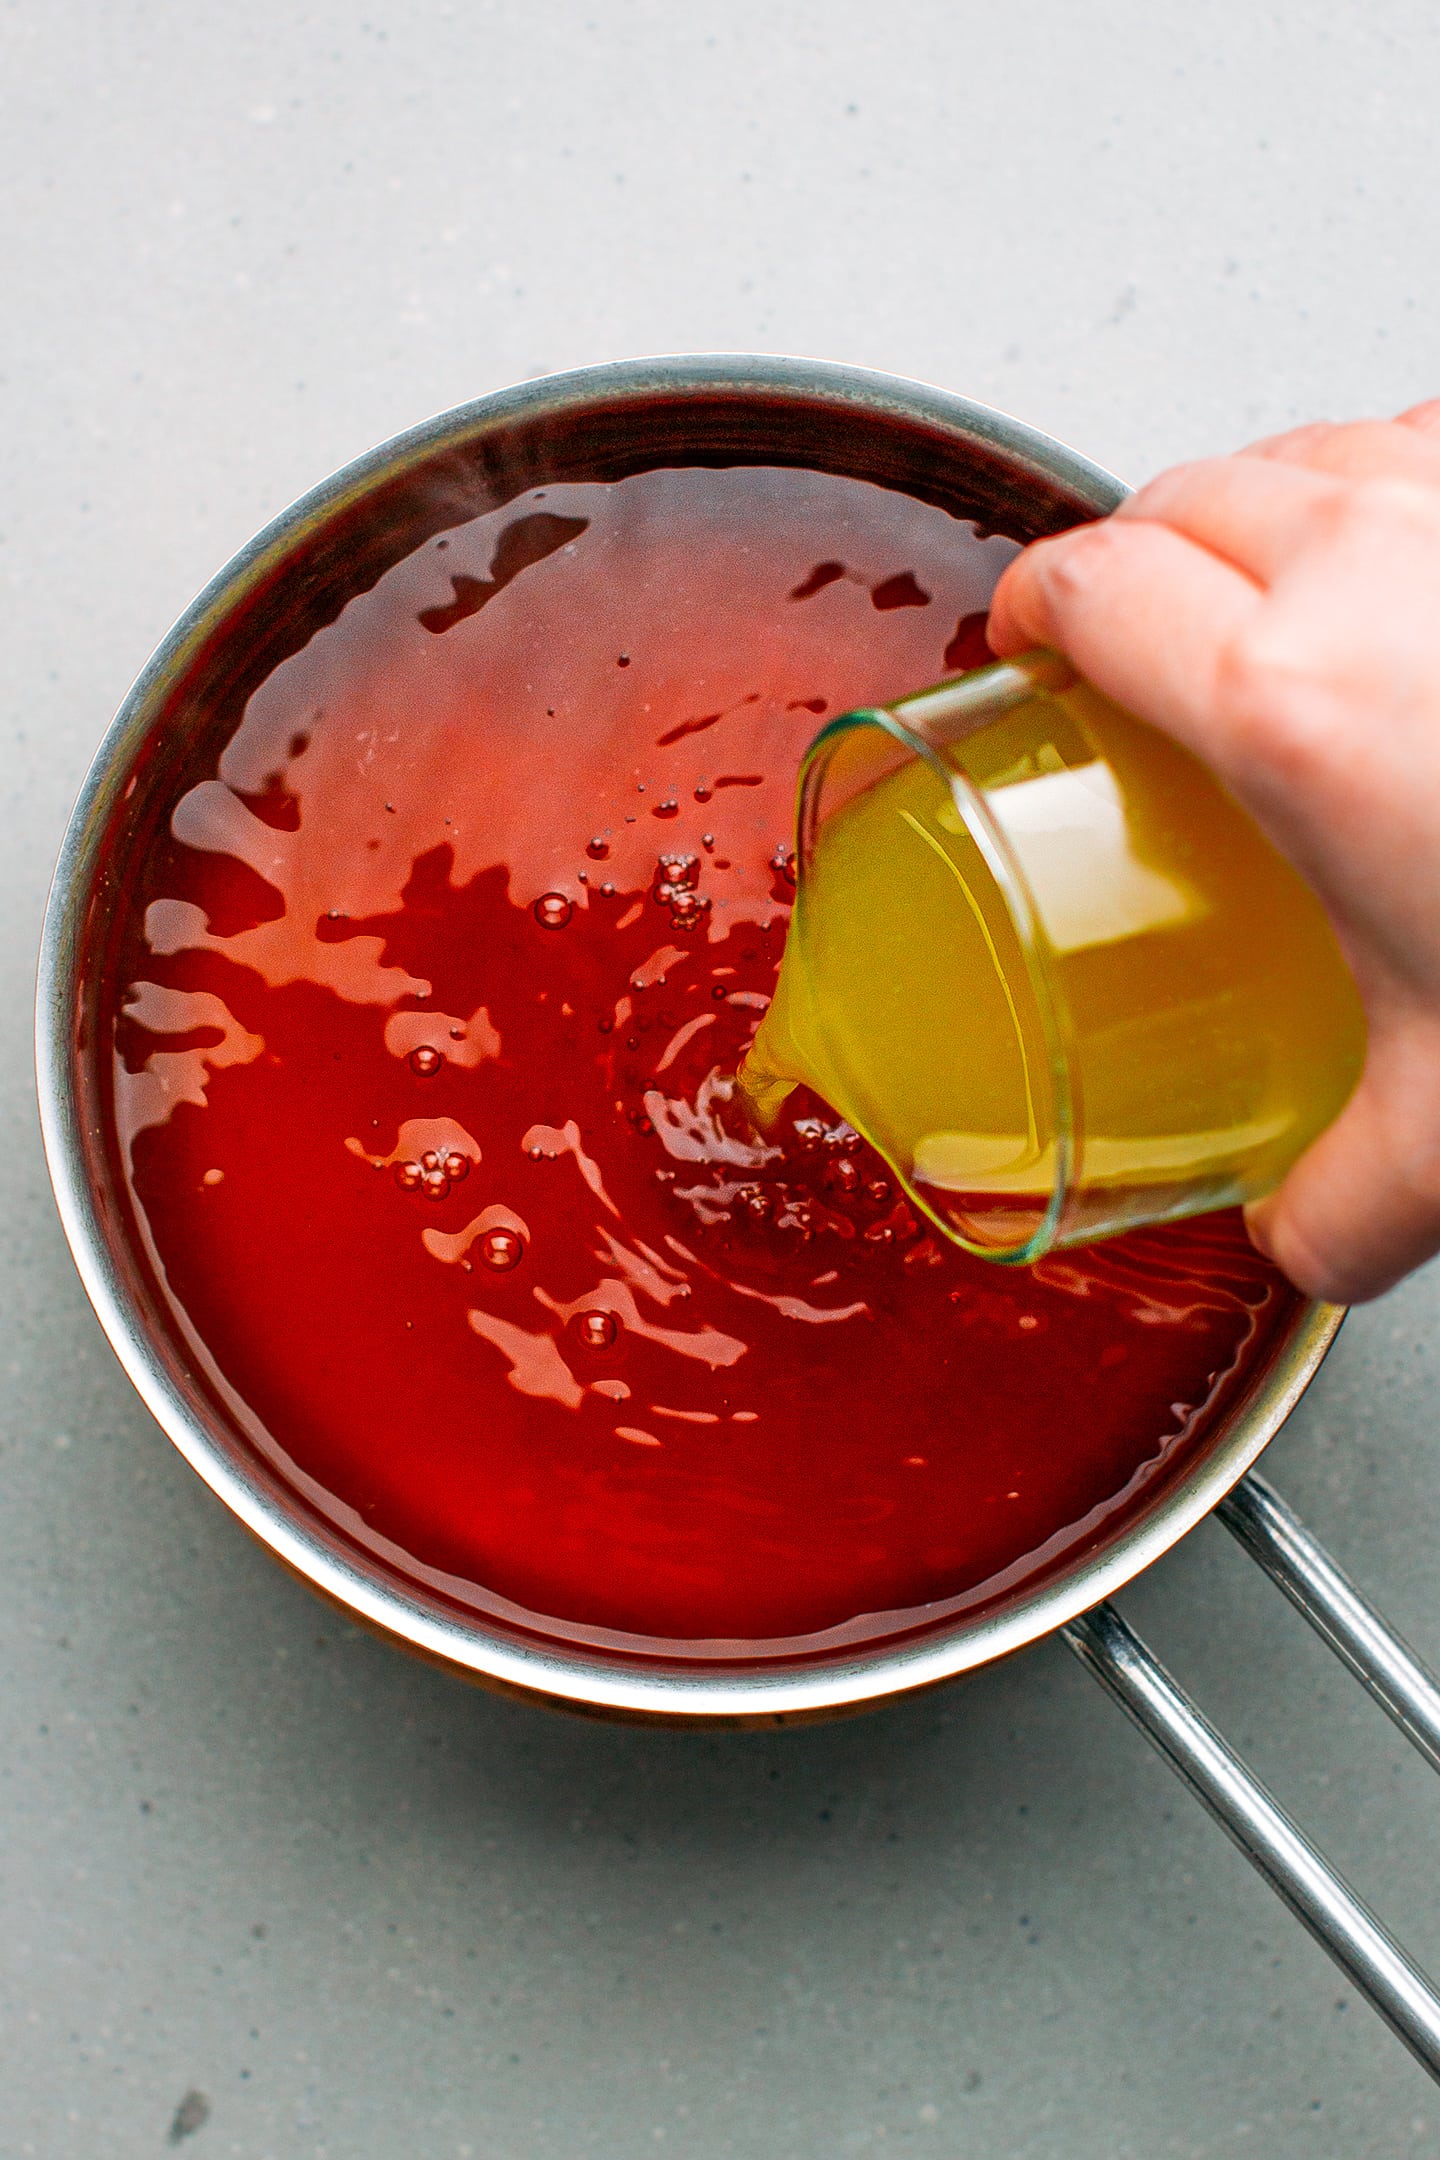 Pouring orange juice in a saucepan.